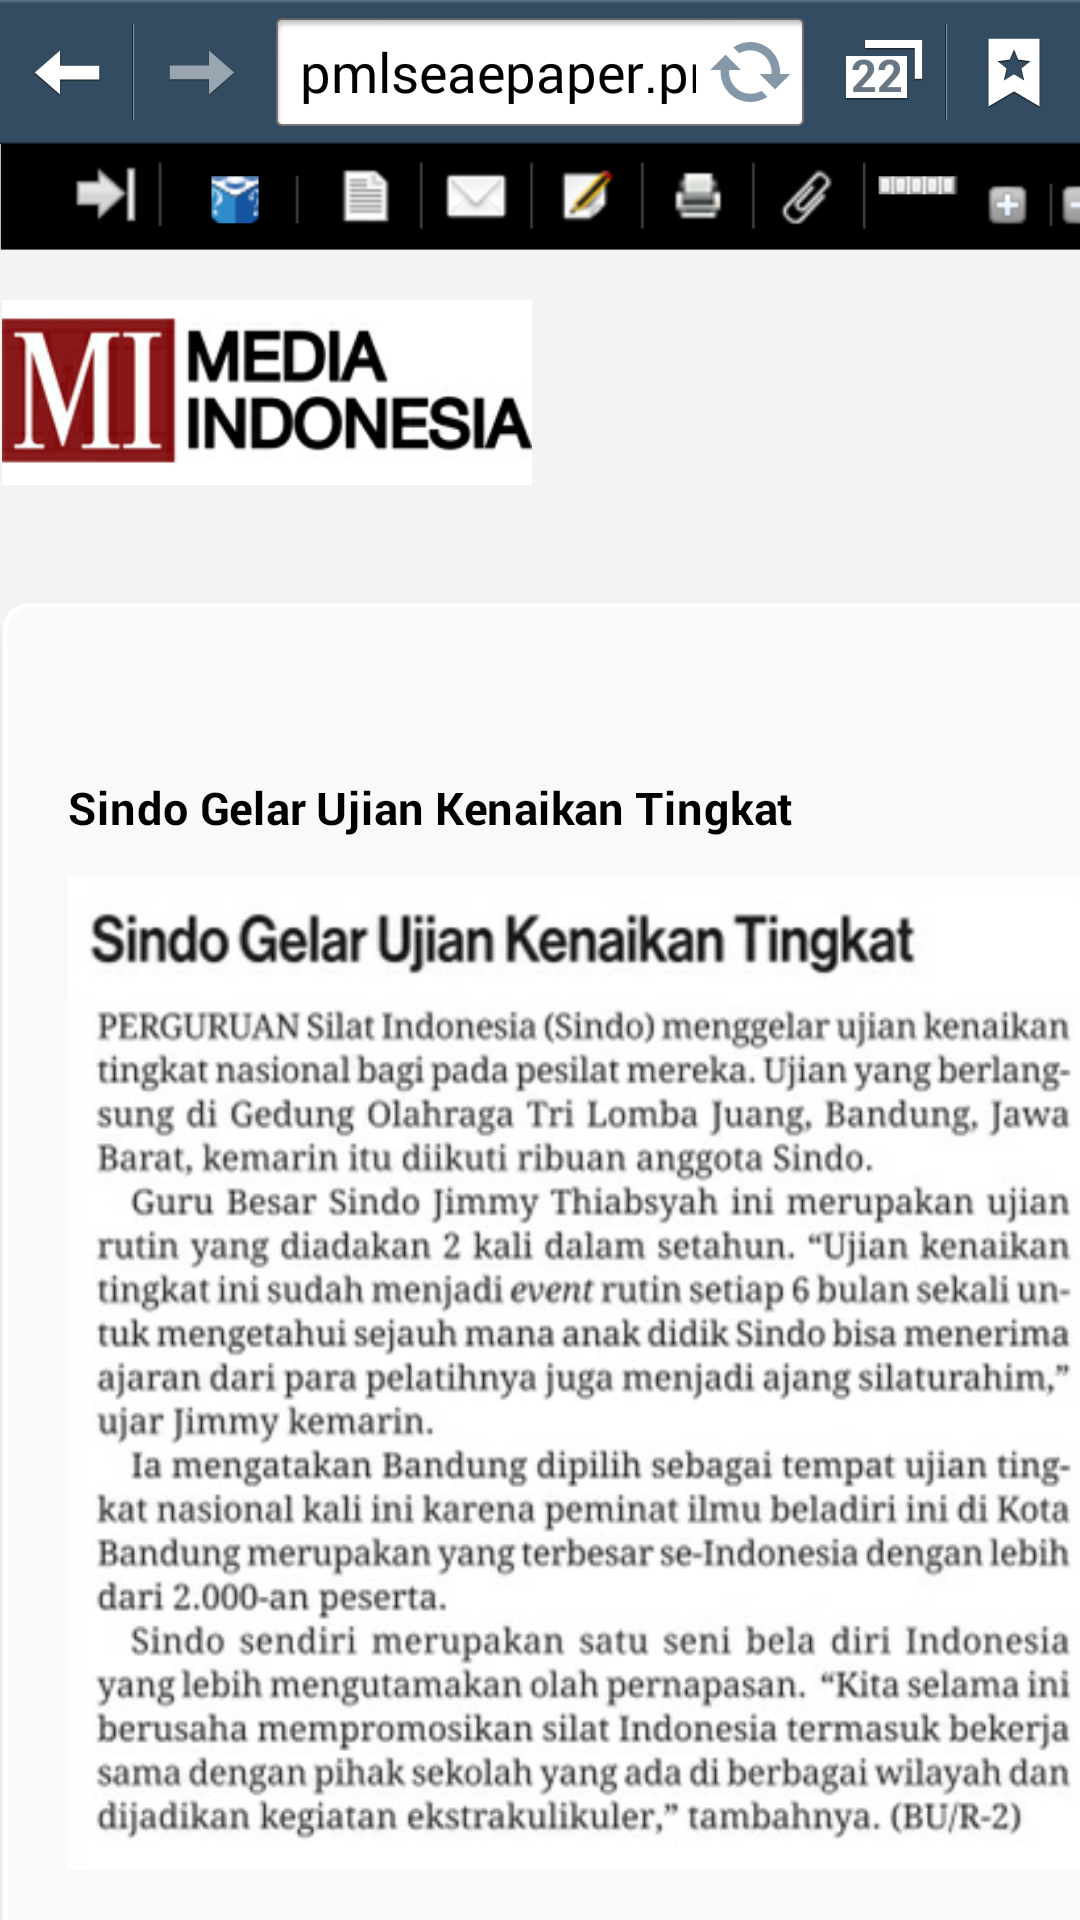 SINDO in Media Indonesia newspaper